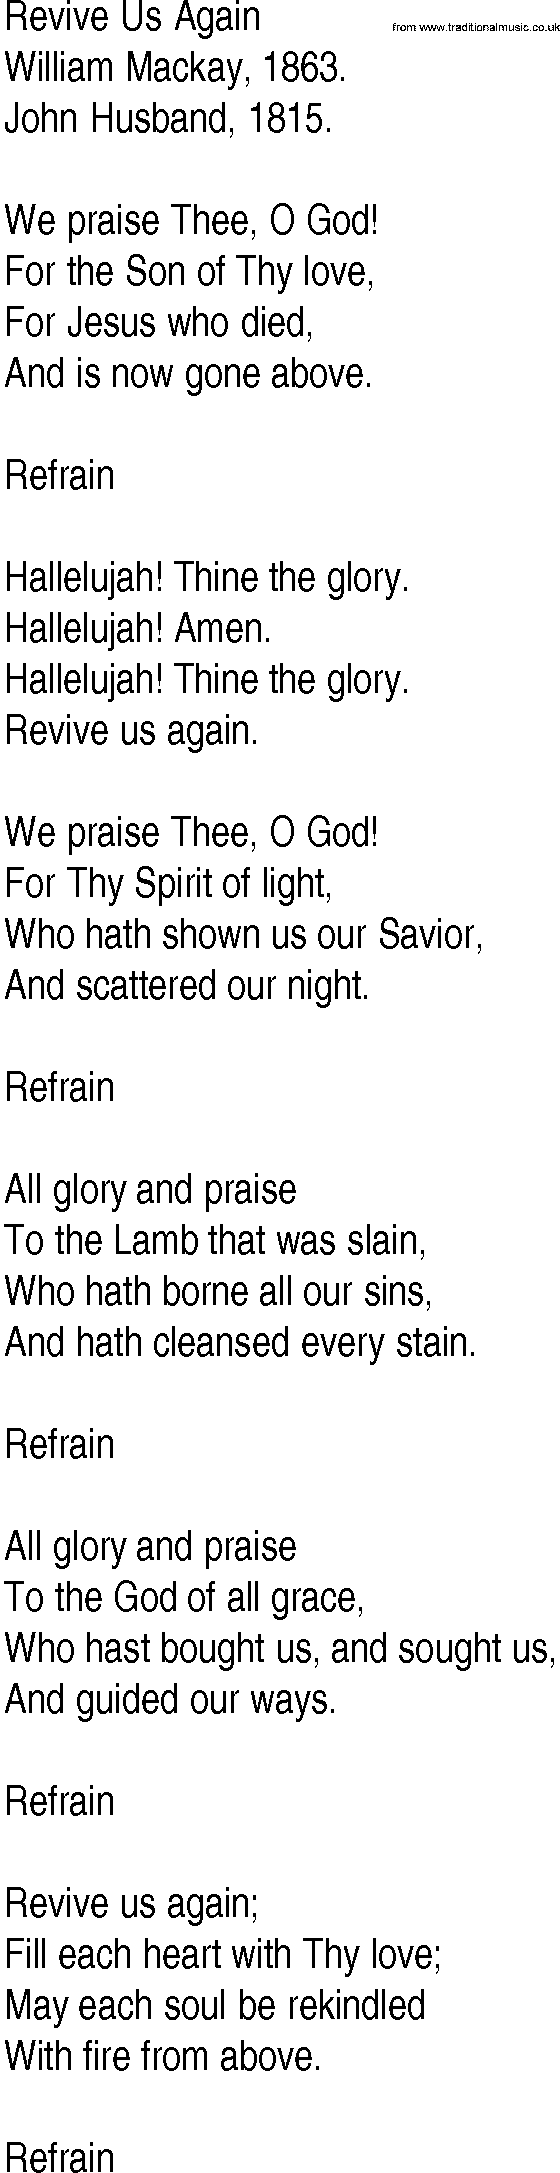 Hymn and Gospel Song: Revive Us Again by William Mackay lyrics